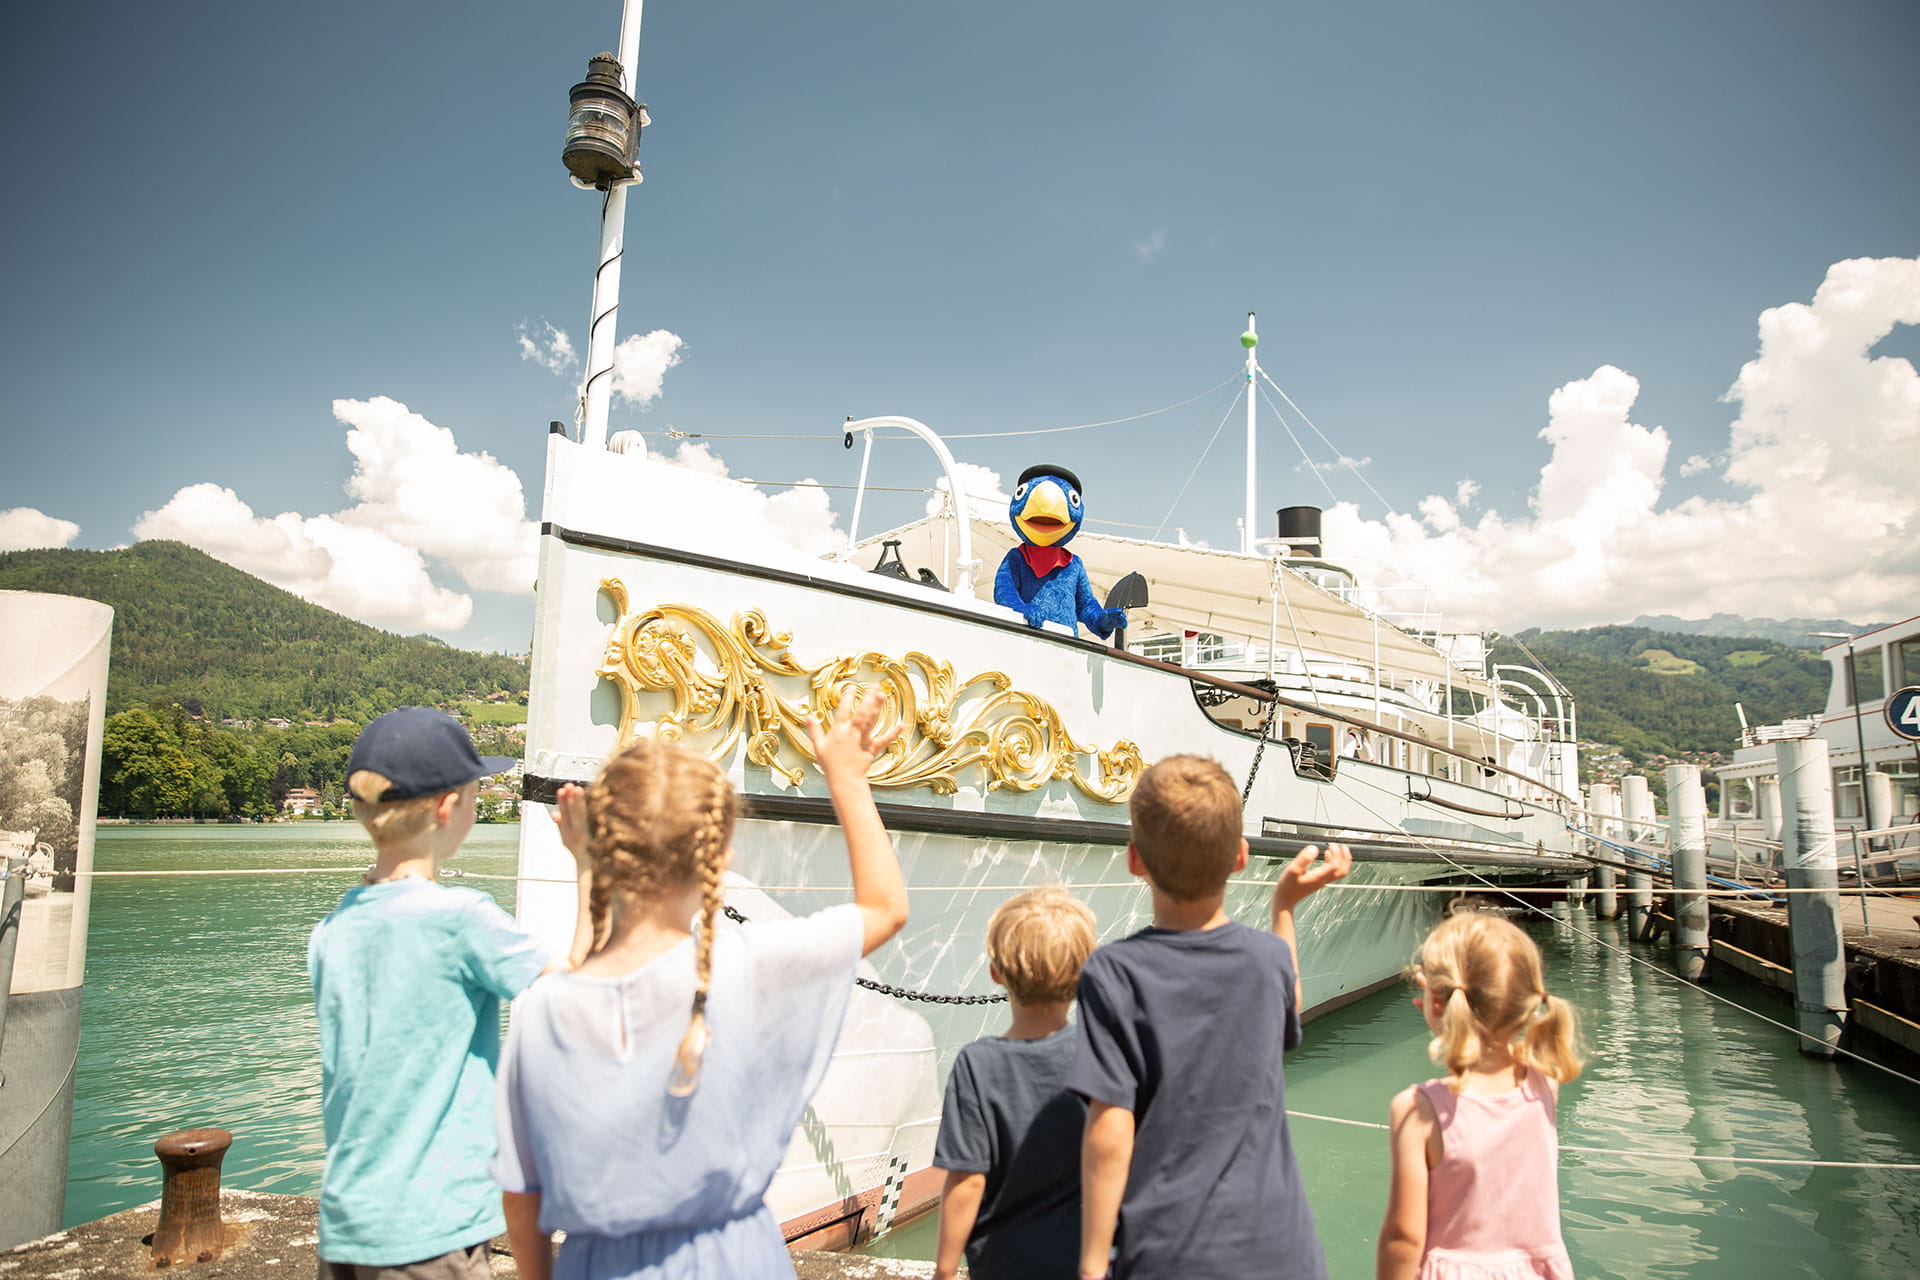 Globi on the paddle steamer, waving to children